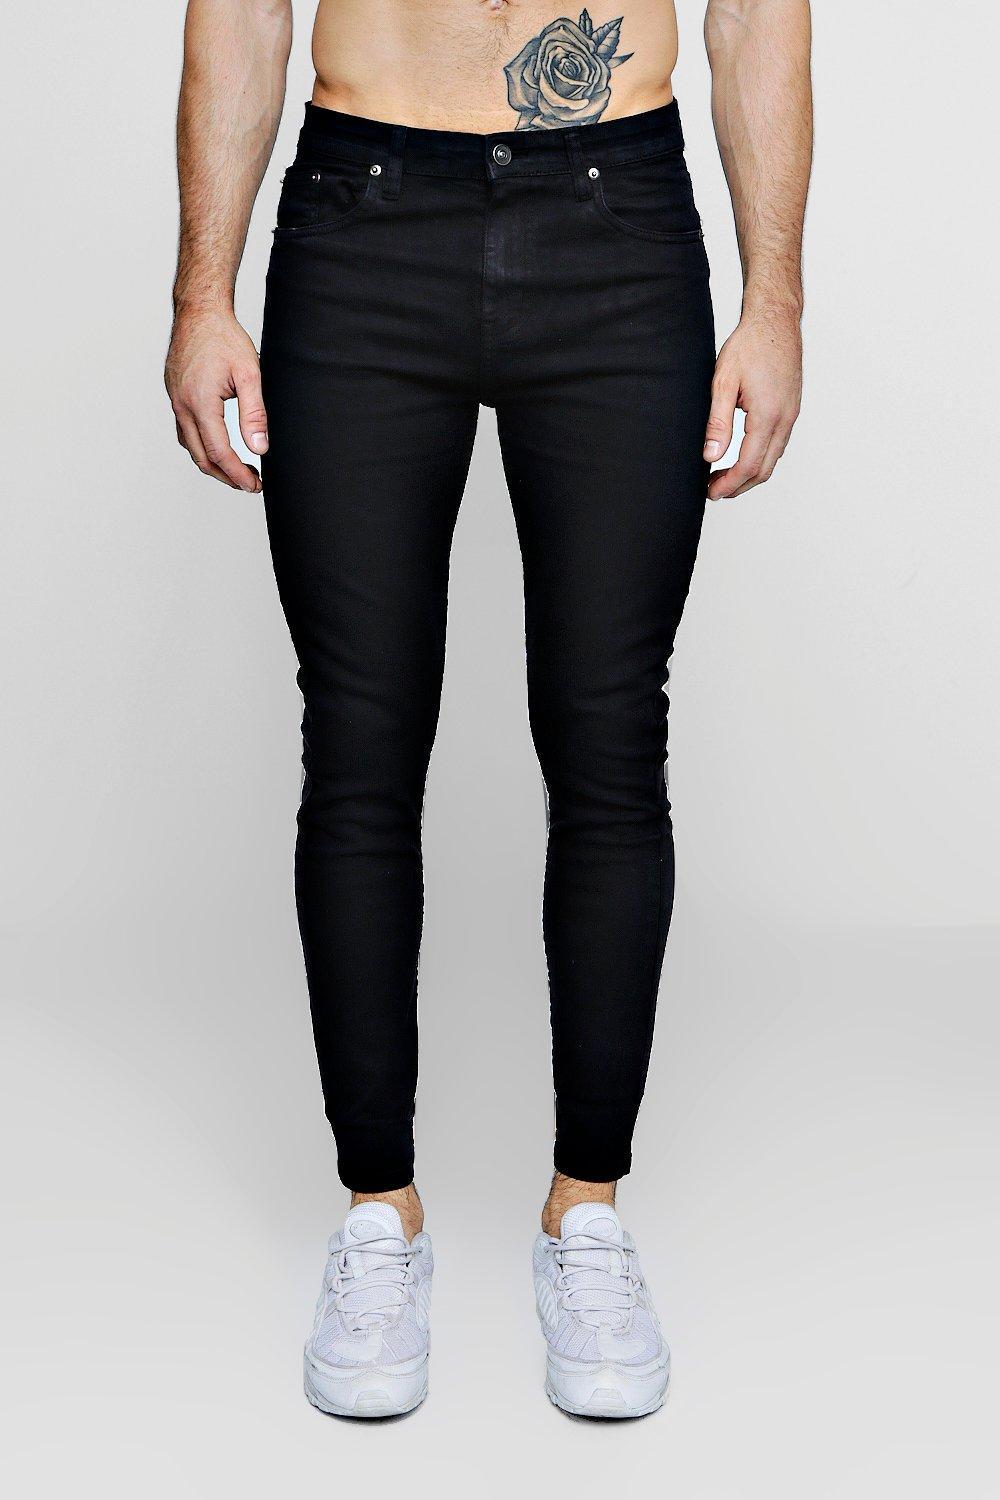 Lyst - Boohoo Black Super Skinny Fit Jeans in Black for Men - Save 78%